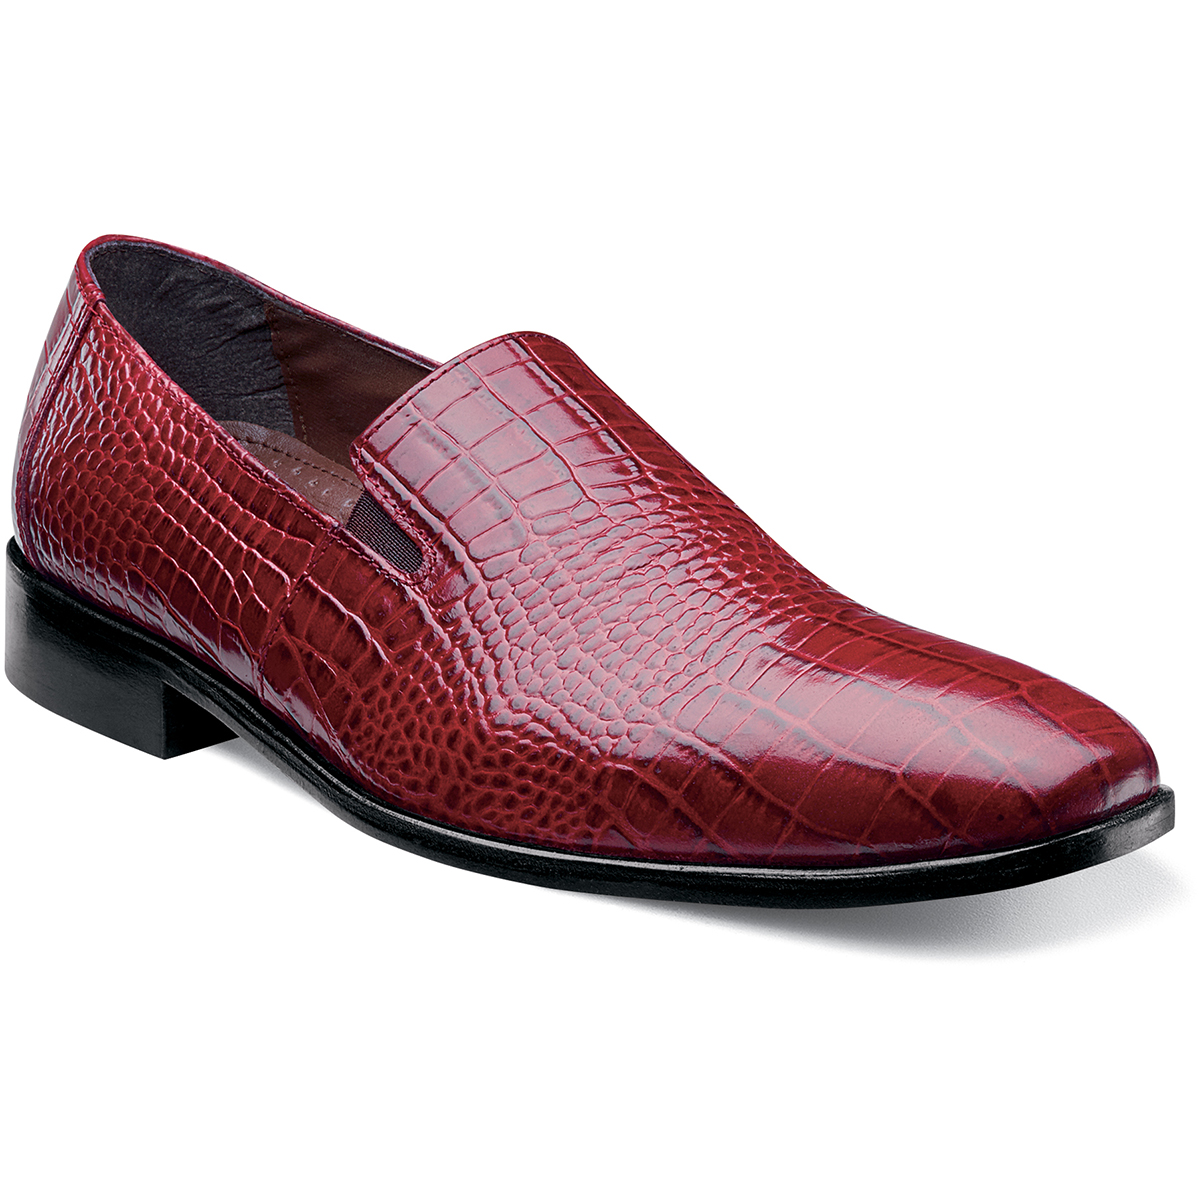 Men's Dress Shoes | Red Plain Toe Slip On | Stacy Adams Galindo